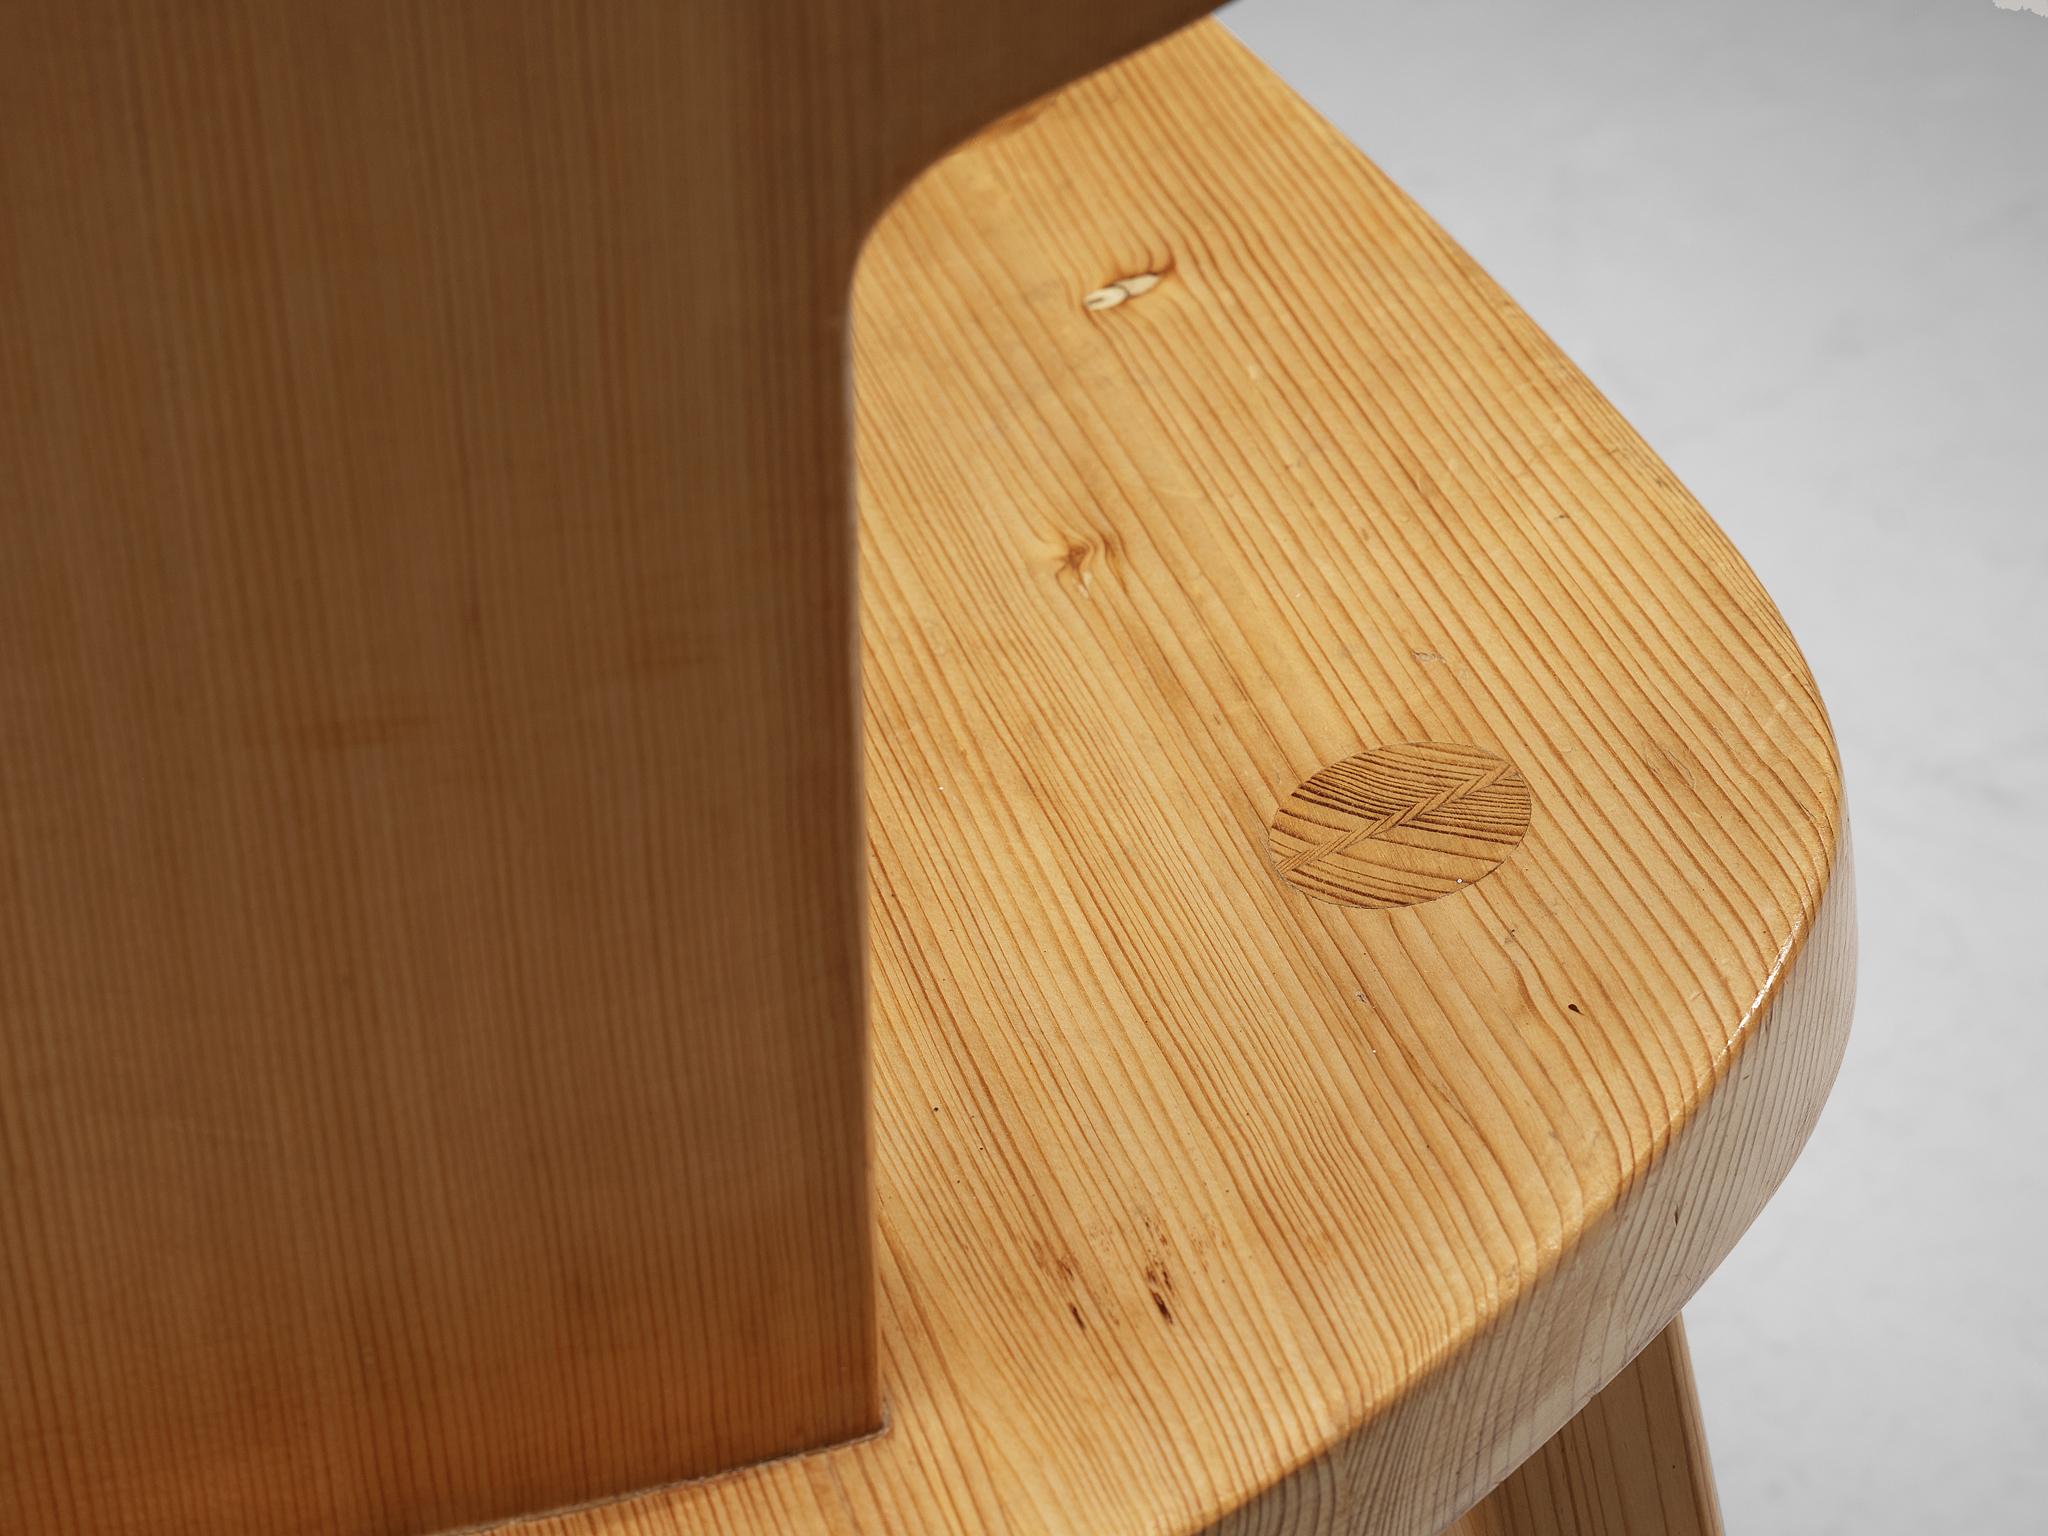 Jacob Kielland-Brandt Sculptural Chair in Solid Pine 1